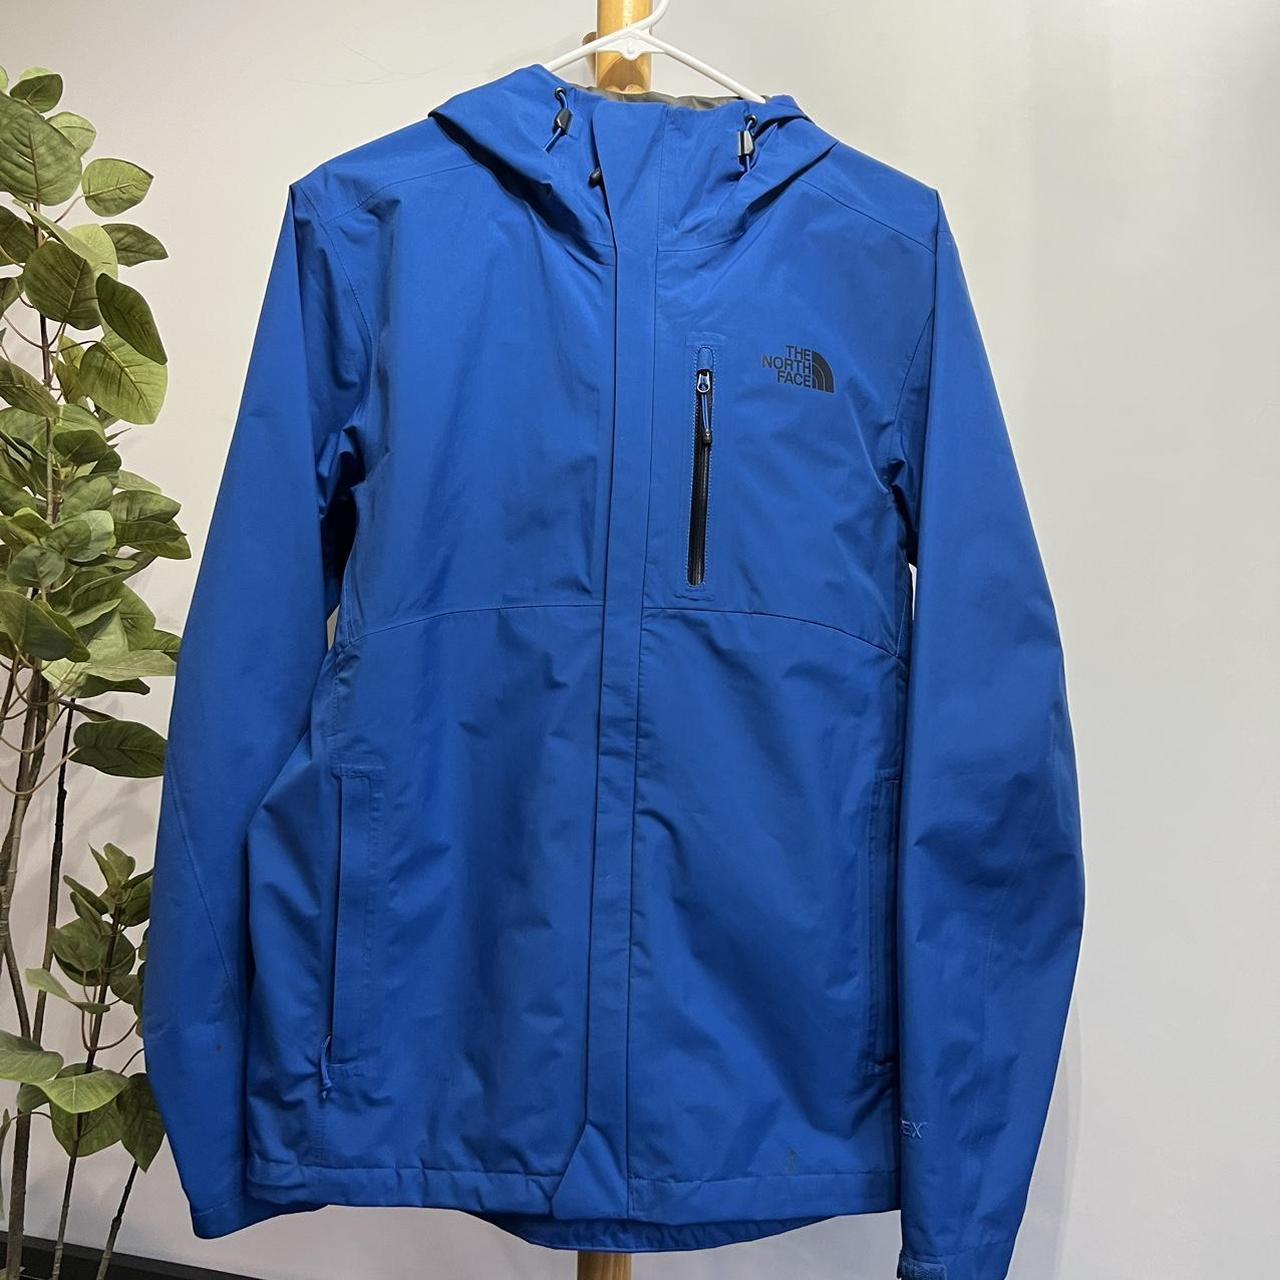 Gortex Waterproof North Face Jacket 🌻 THIS COAT IS... - Depop